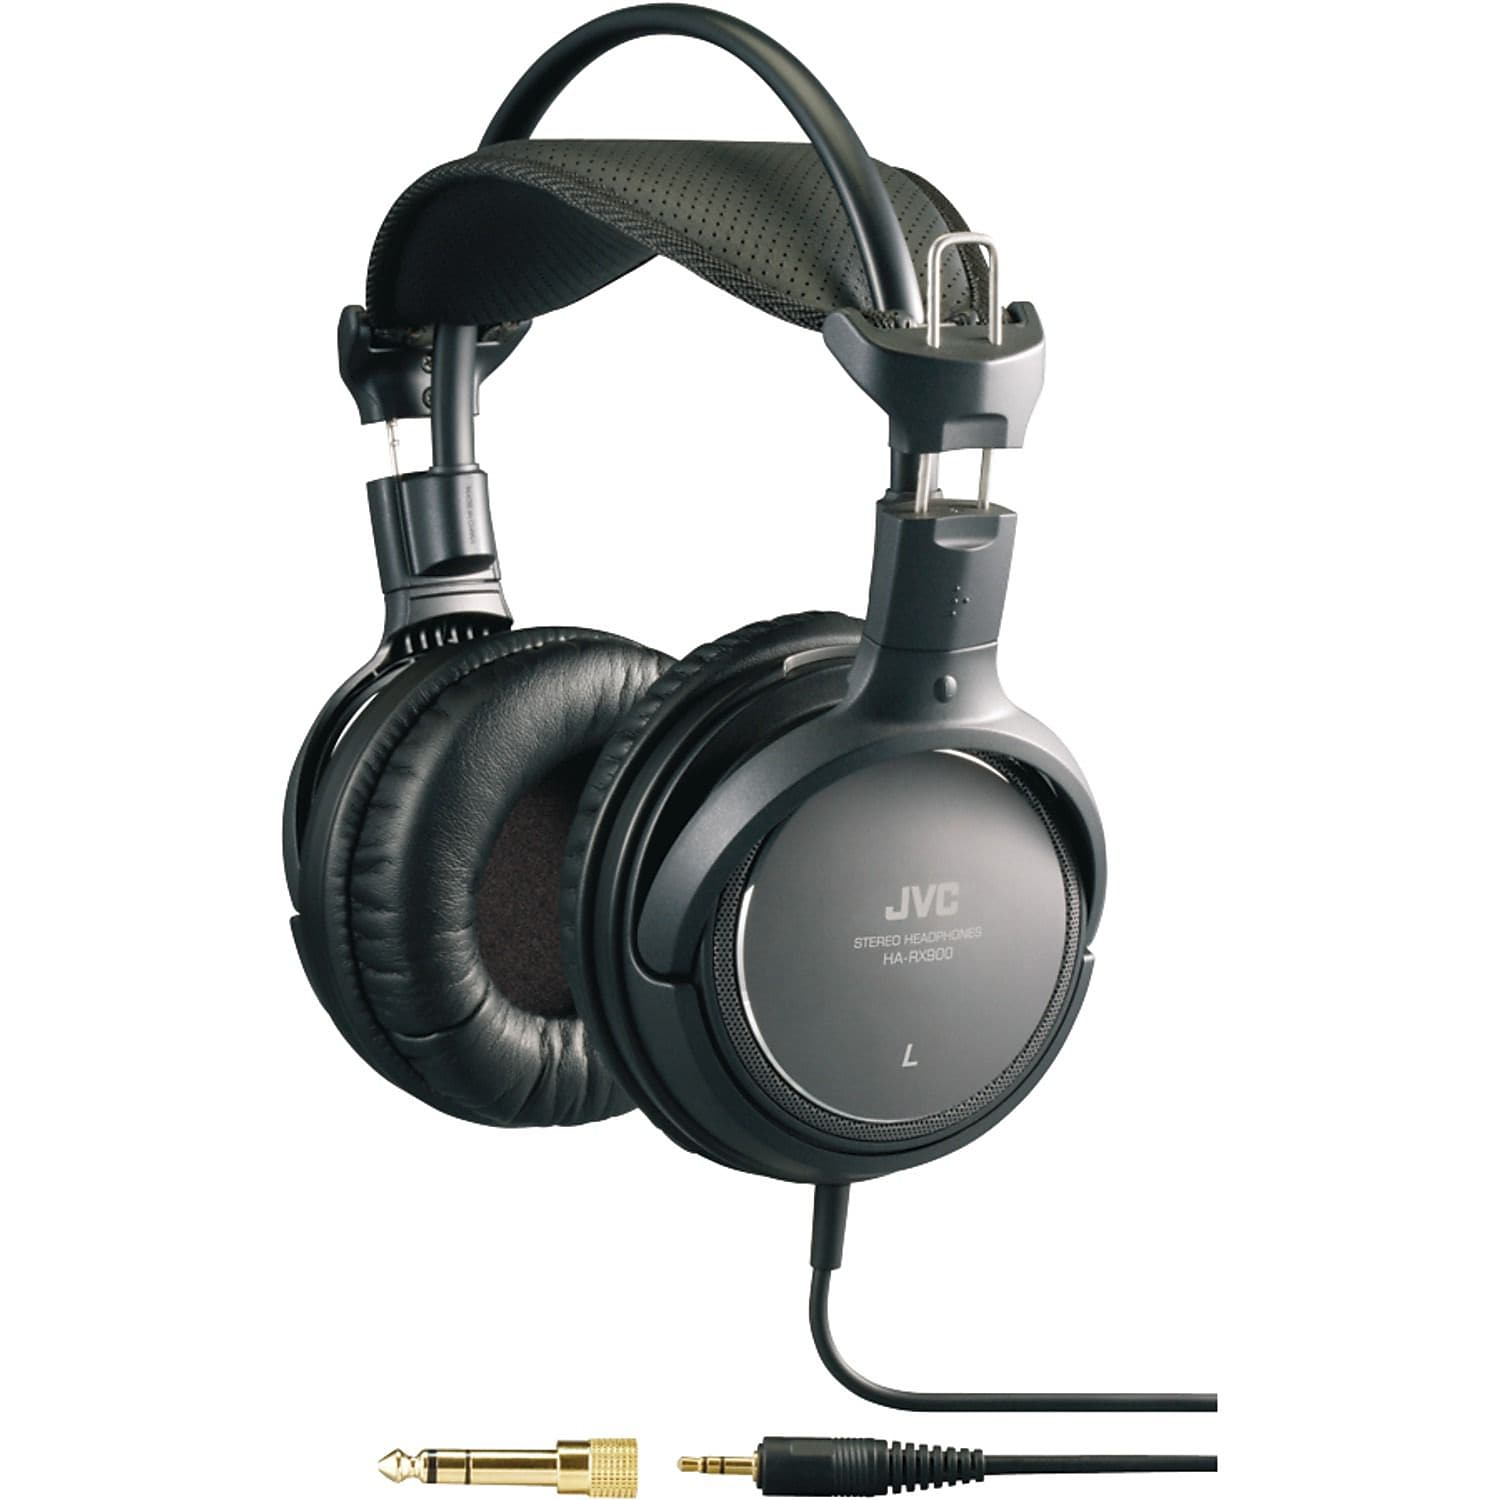 JVC Noise-Canceling On-Ear Headphones, Black, HARX900 - image 1 of 2